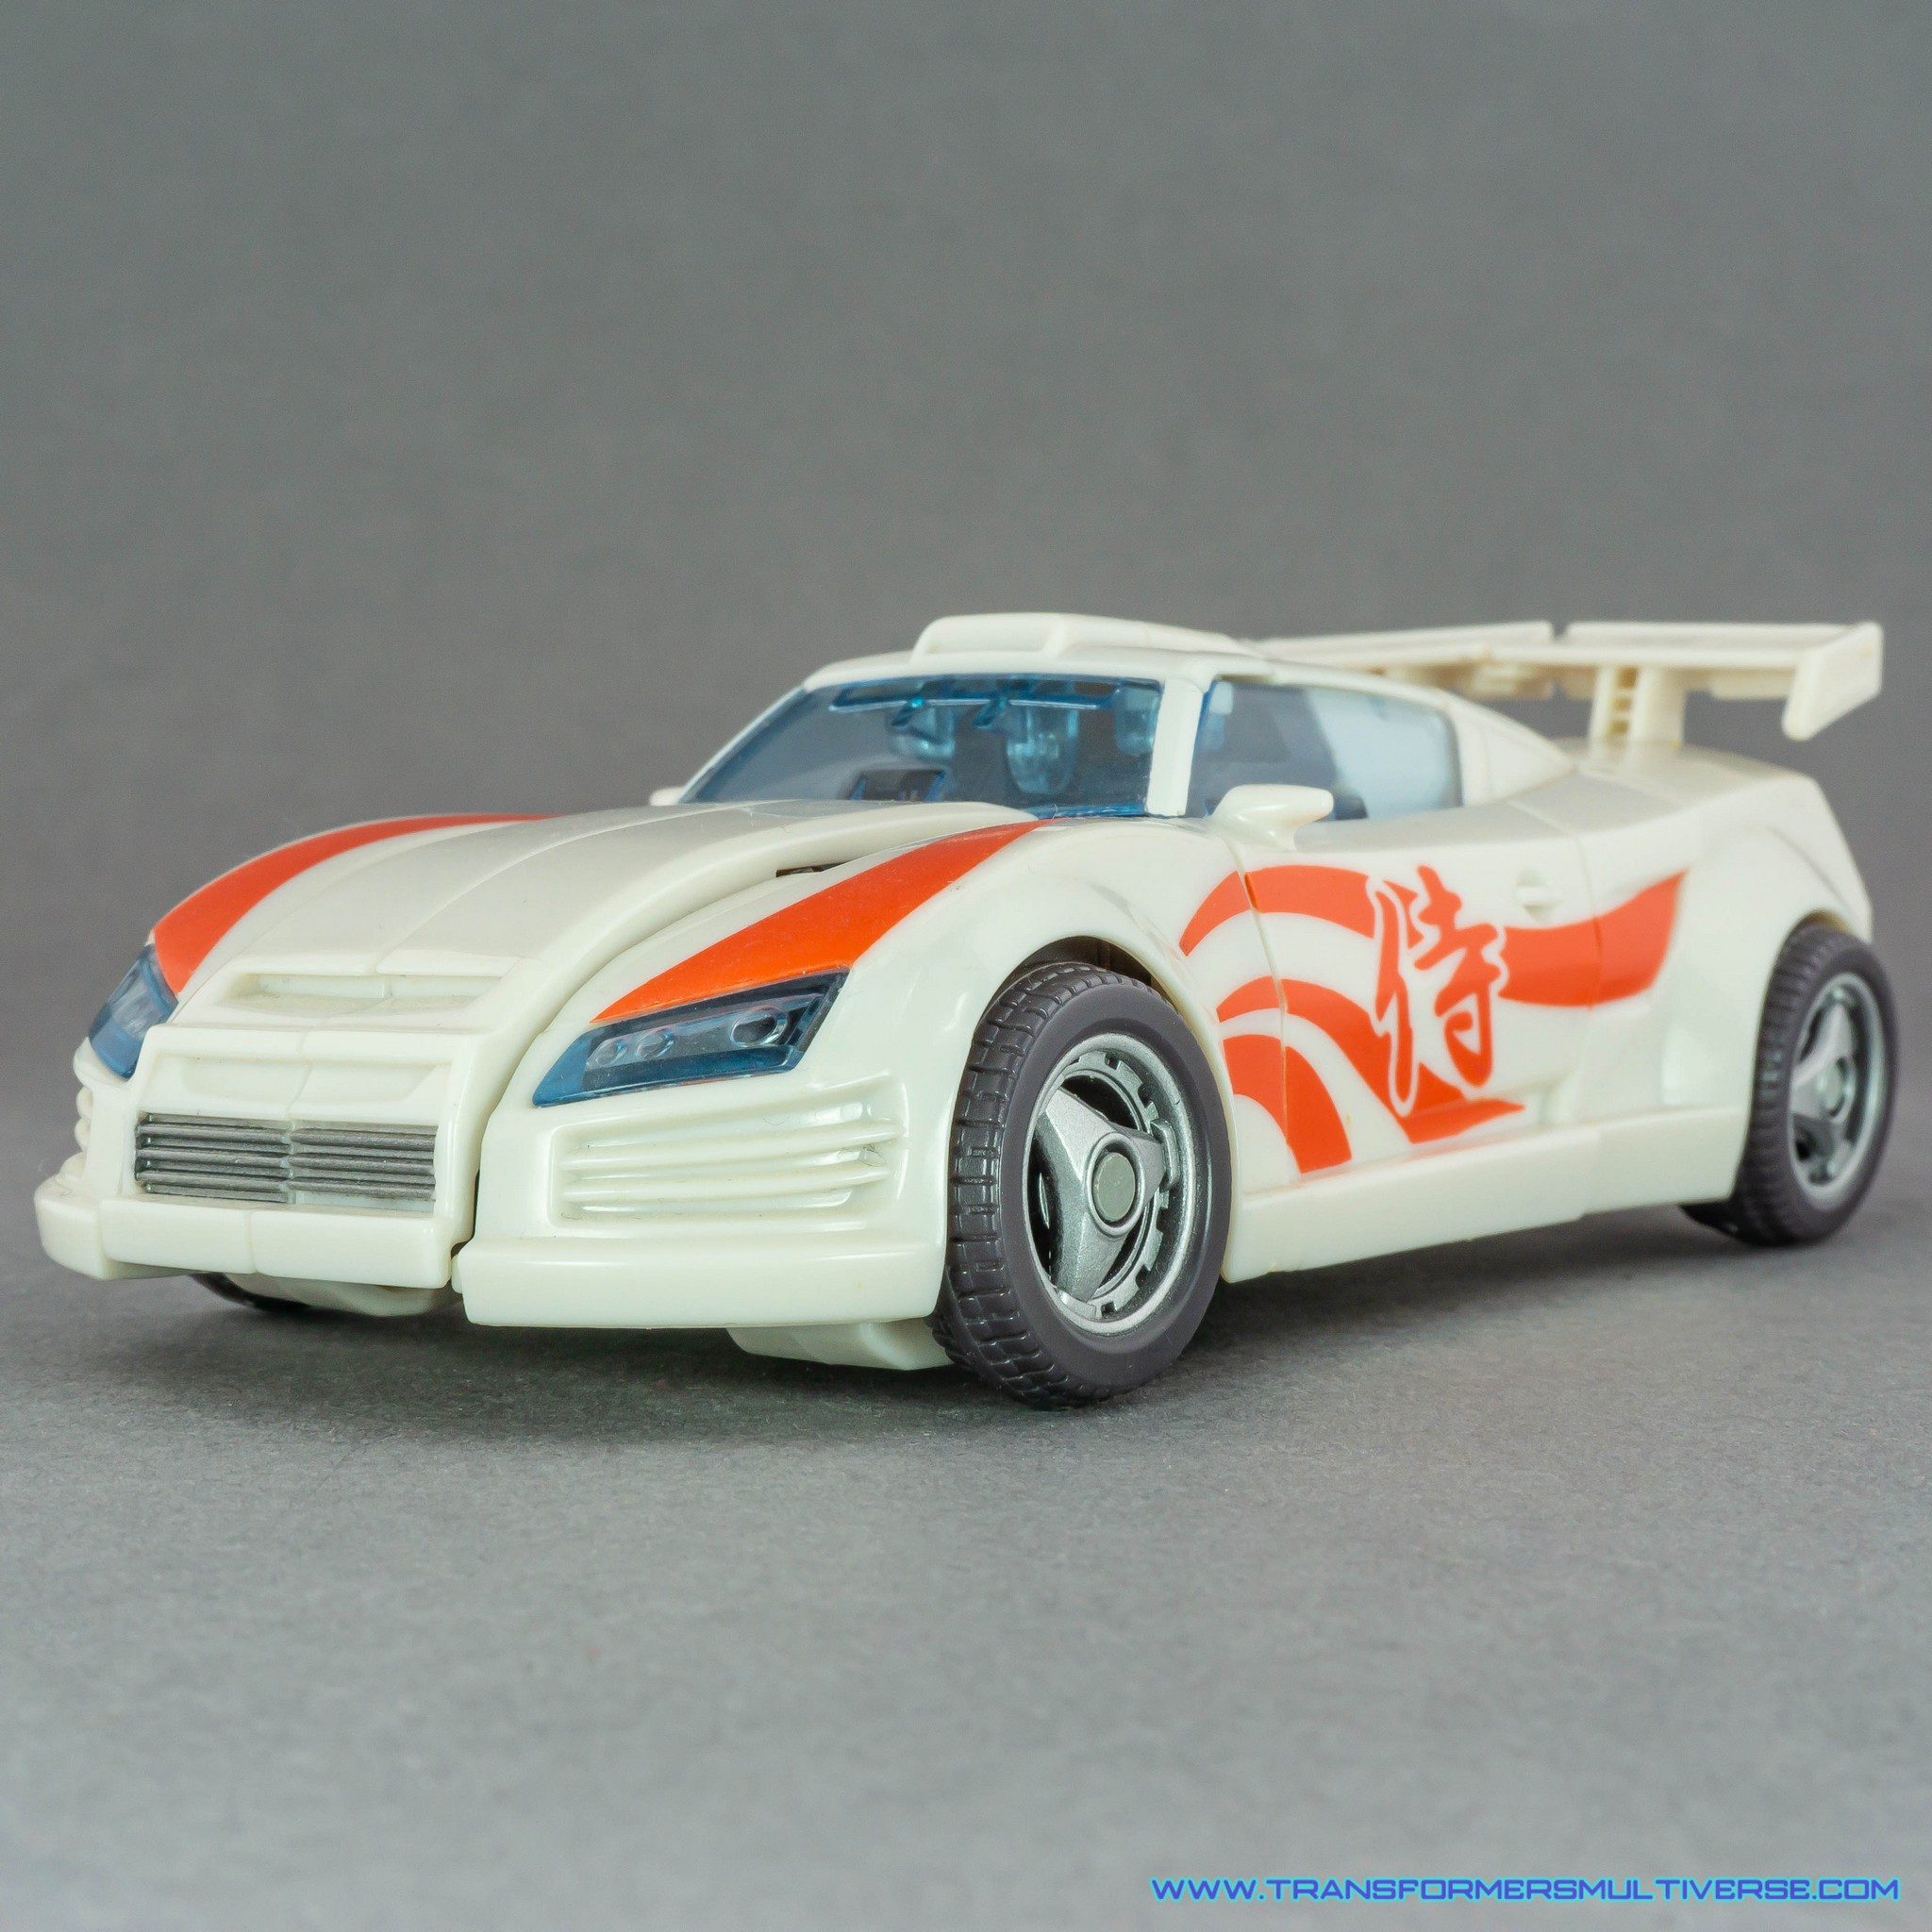 Transformers Generations Drift Sports car mode, alternate angle 2